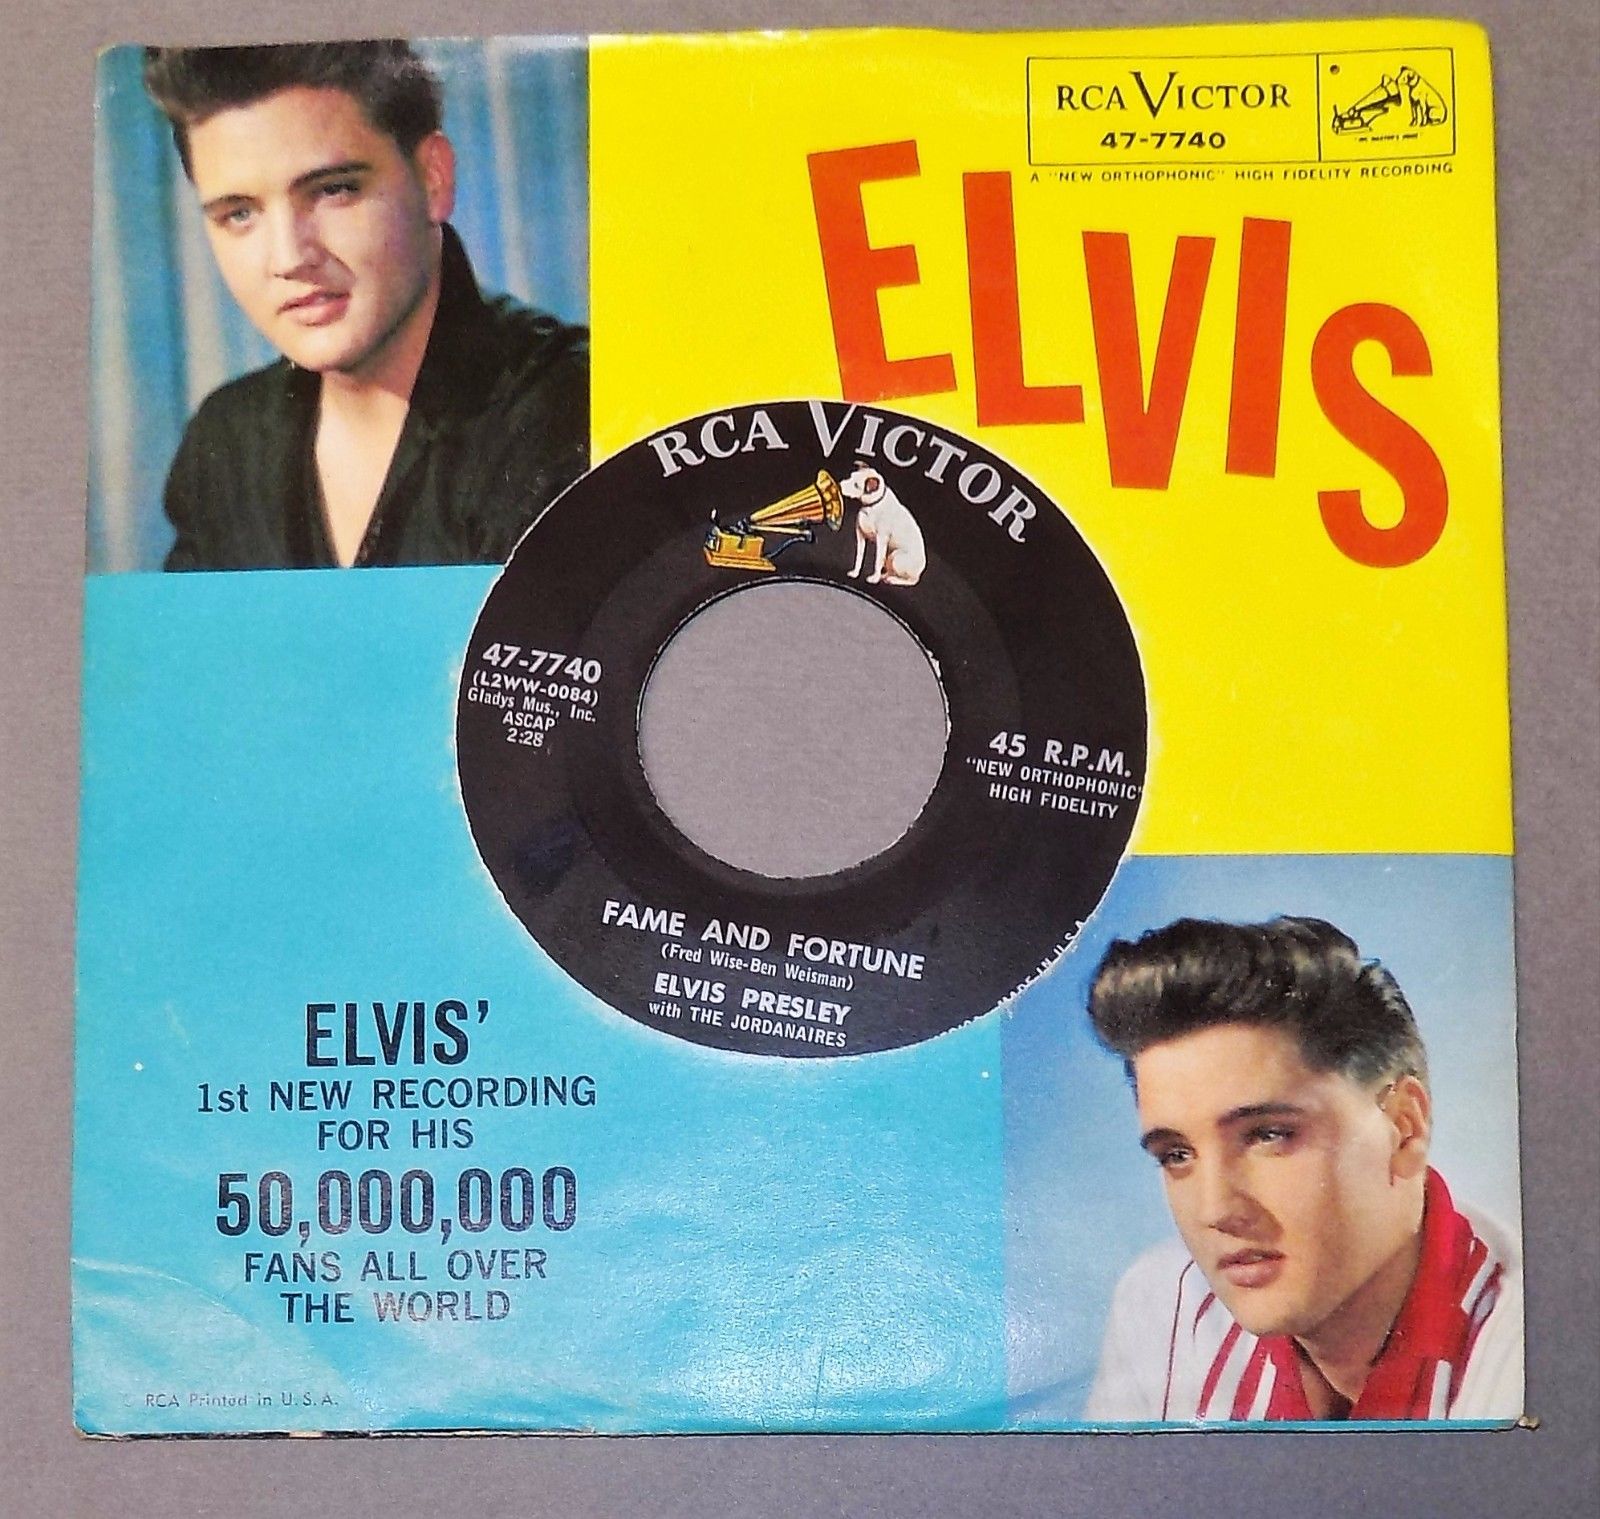 The Number Ones: Elvis Presley's “Stuck On You”